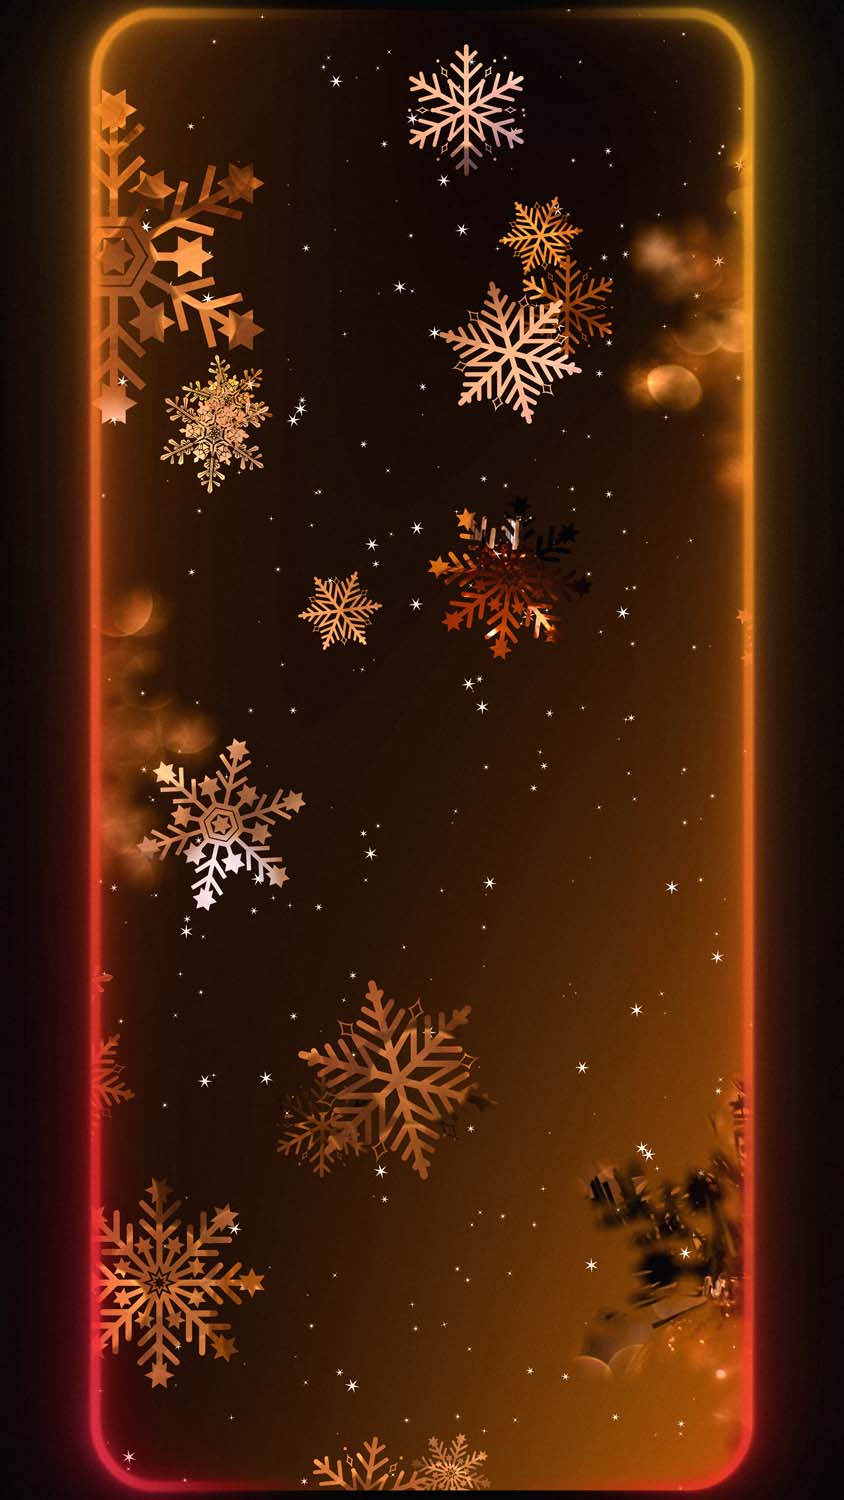 Snowflakes Neon Border iPhone Wallpaper